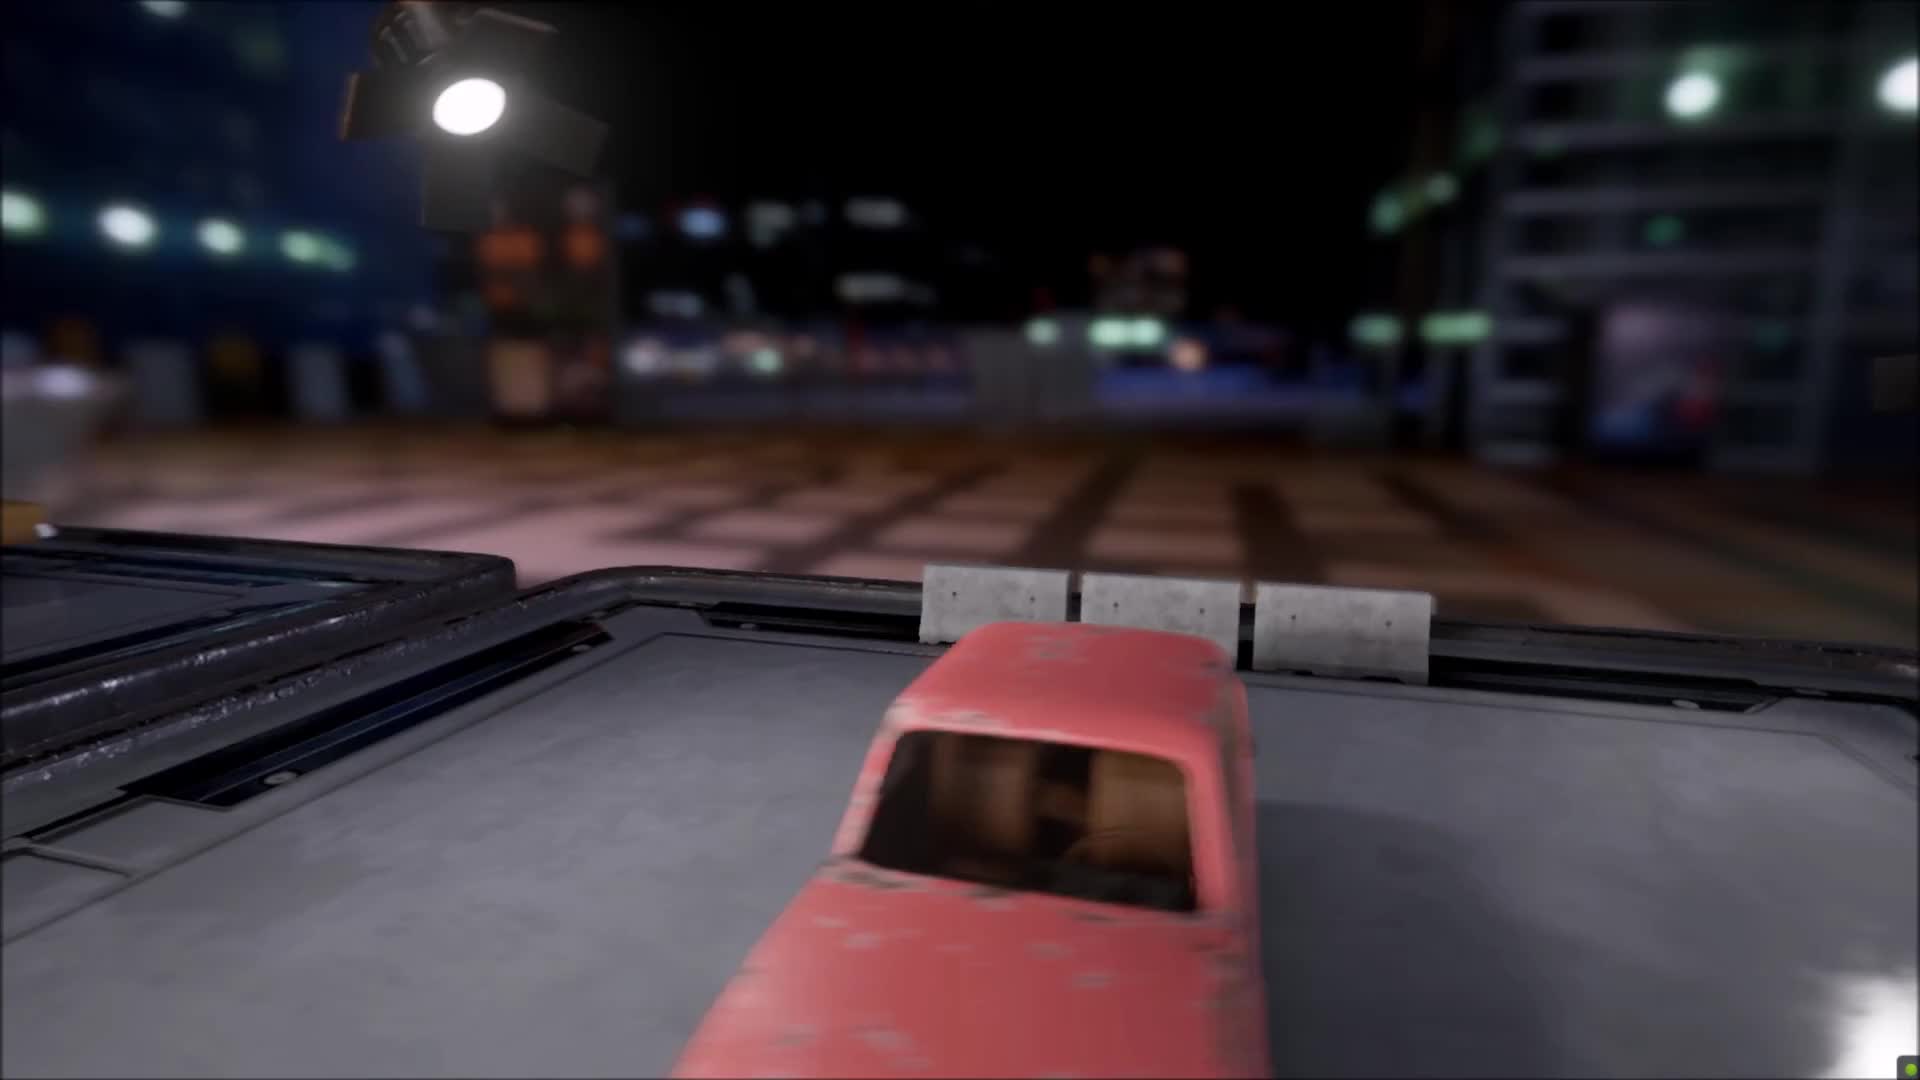 Car Destruction in Unreal Engine